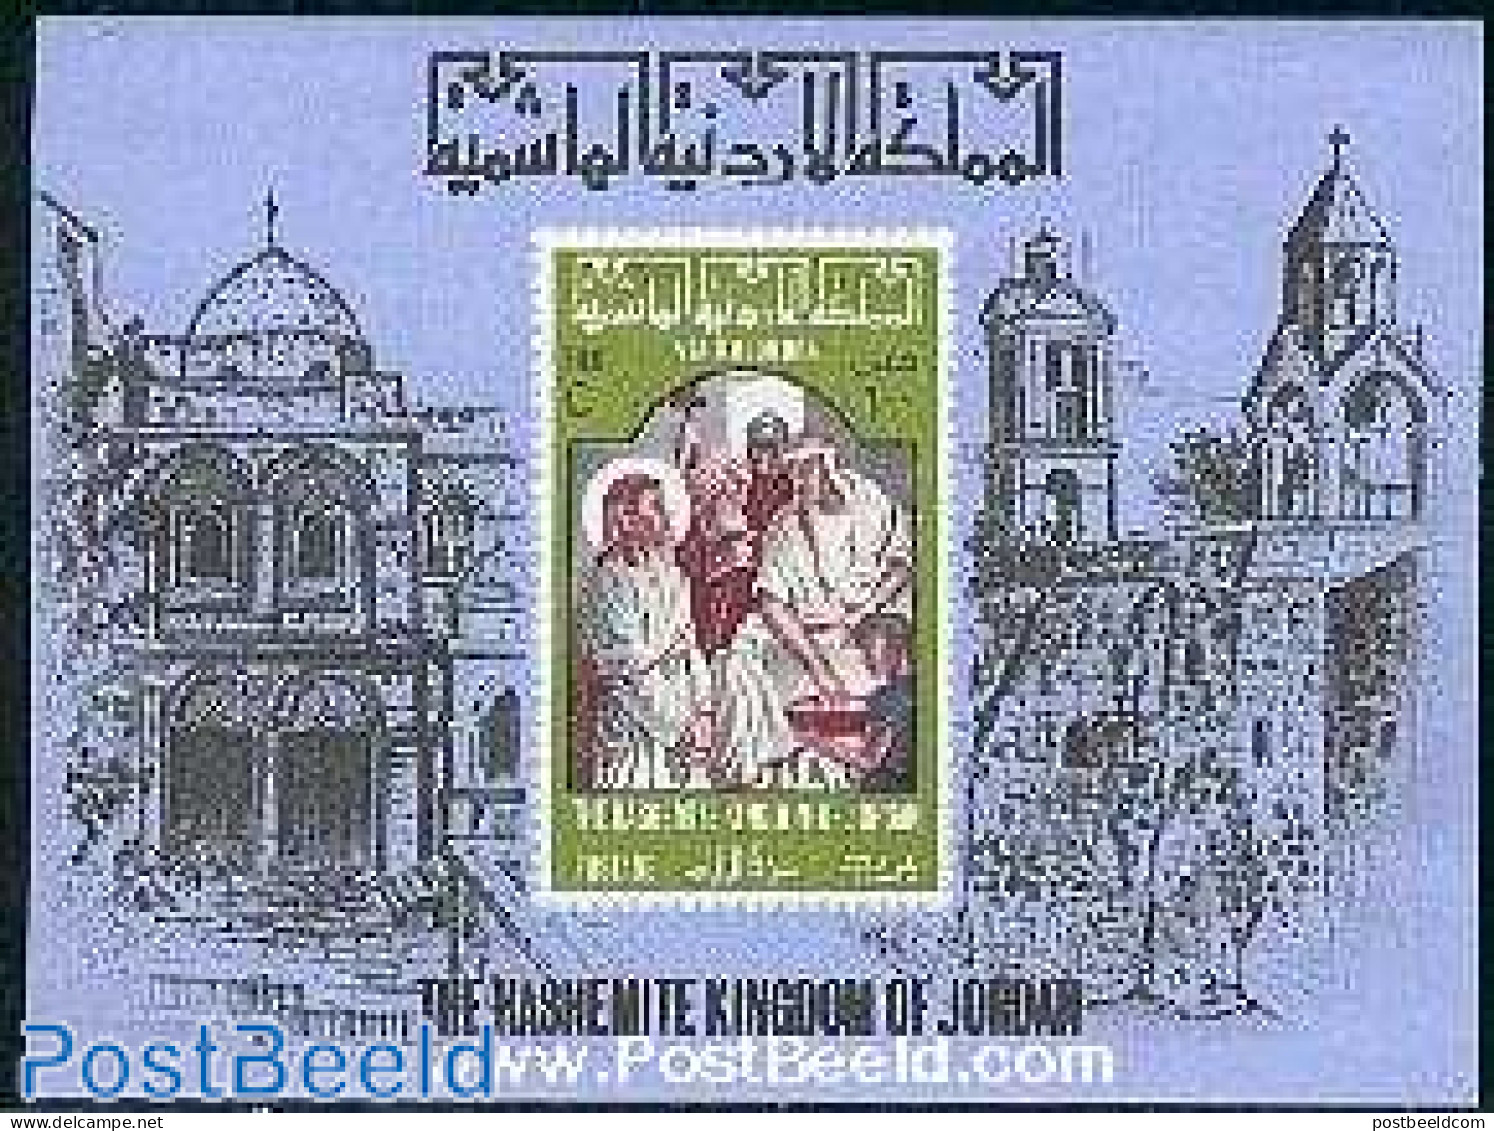 Jordan 1966 Crusifixion Of Christ S/s, Mint NH, Religion - Religion - Jordanië